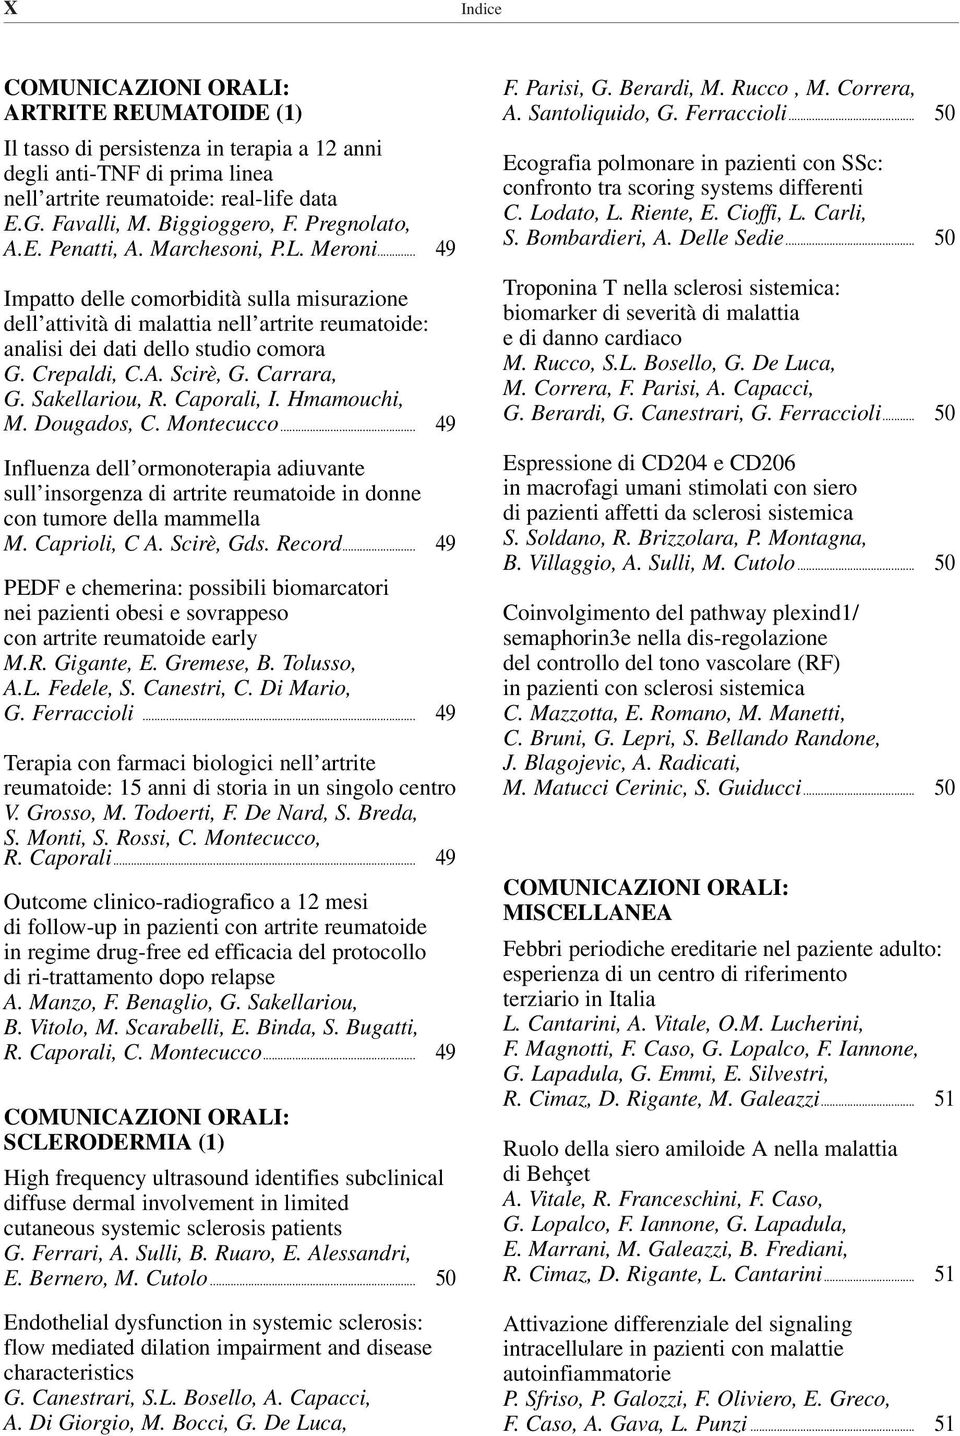 Crepaldi, C.A. Scirè, G. Carrara, G. Sakellariou, R. Caporali, I. Hmamouchi, M. Dougados, C. Montecucco.